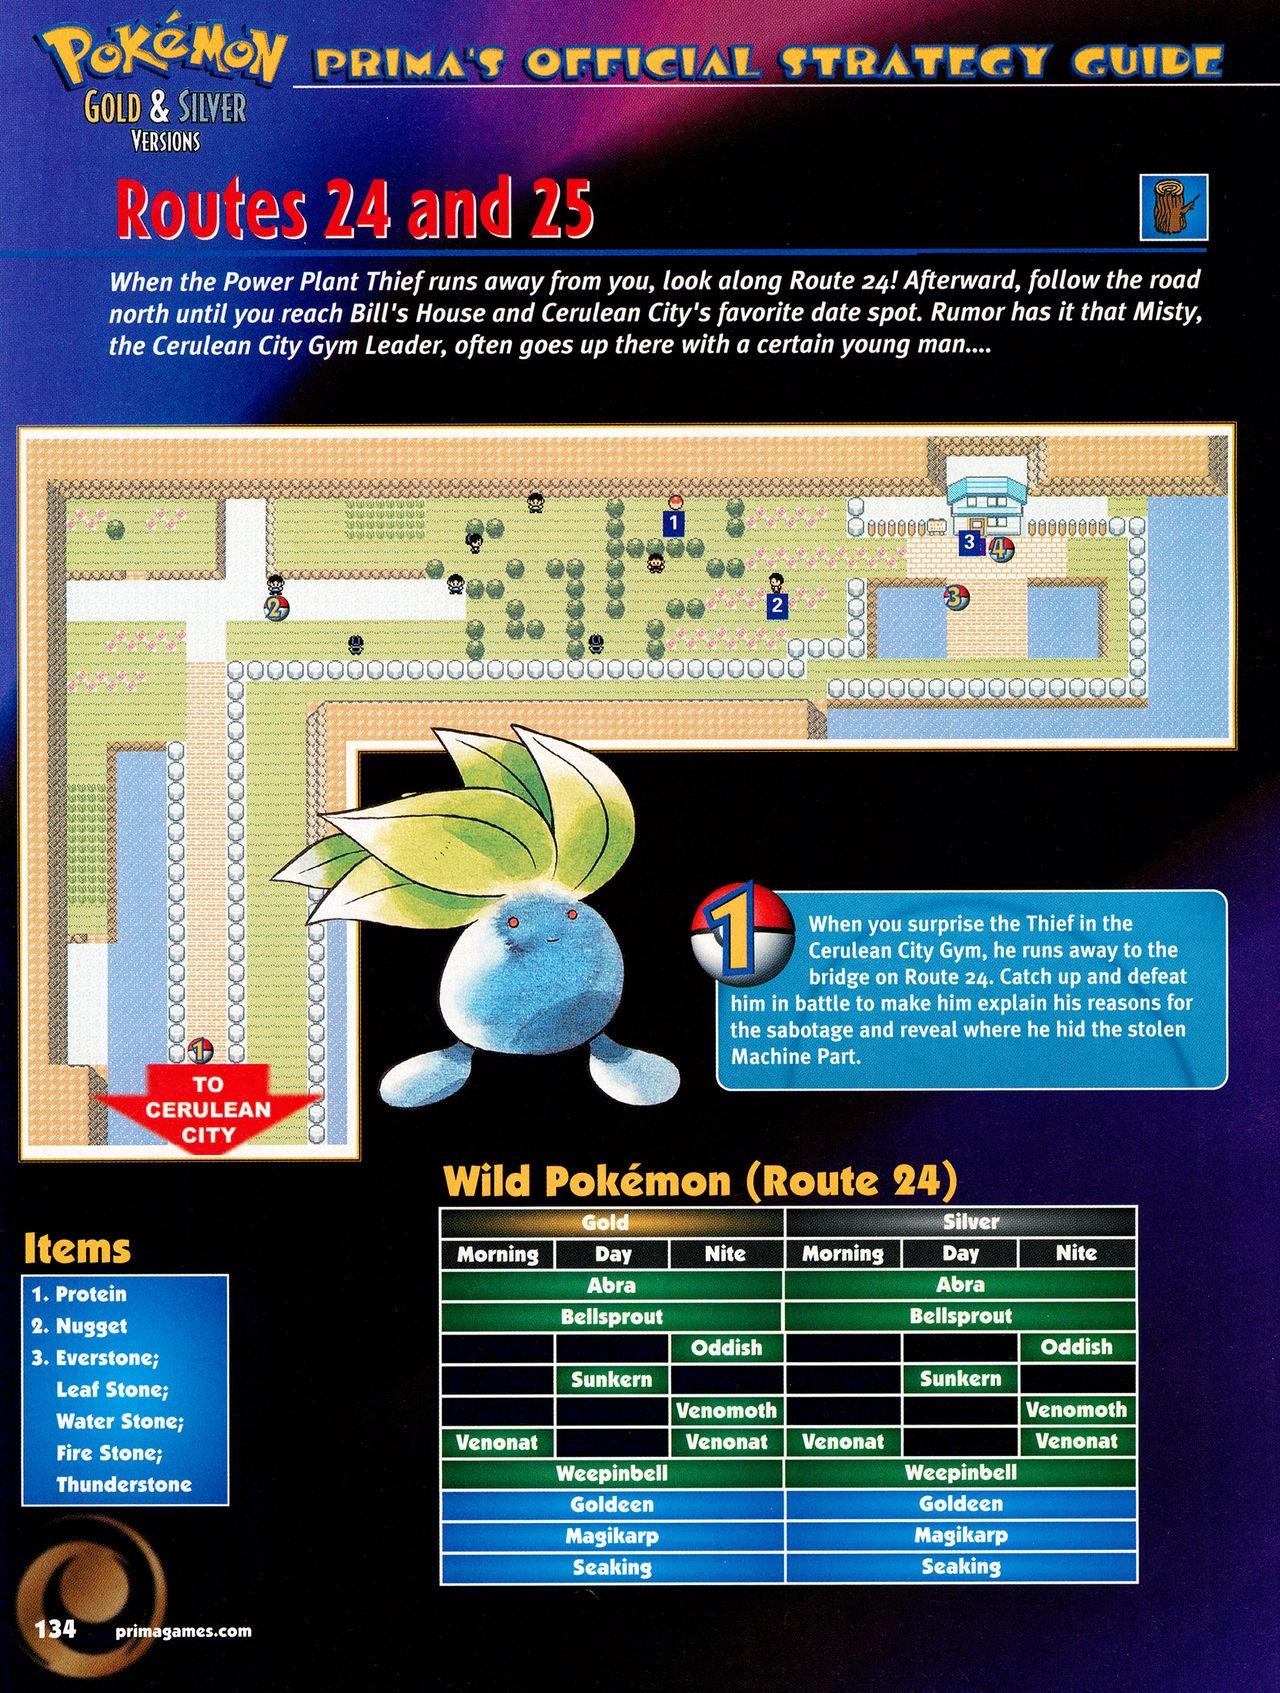 Pokémon Gold & Silver Versions - Strategy Guide 135